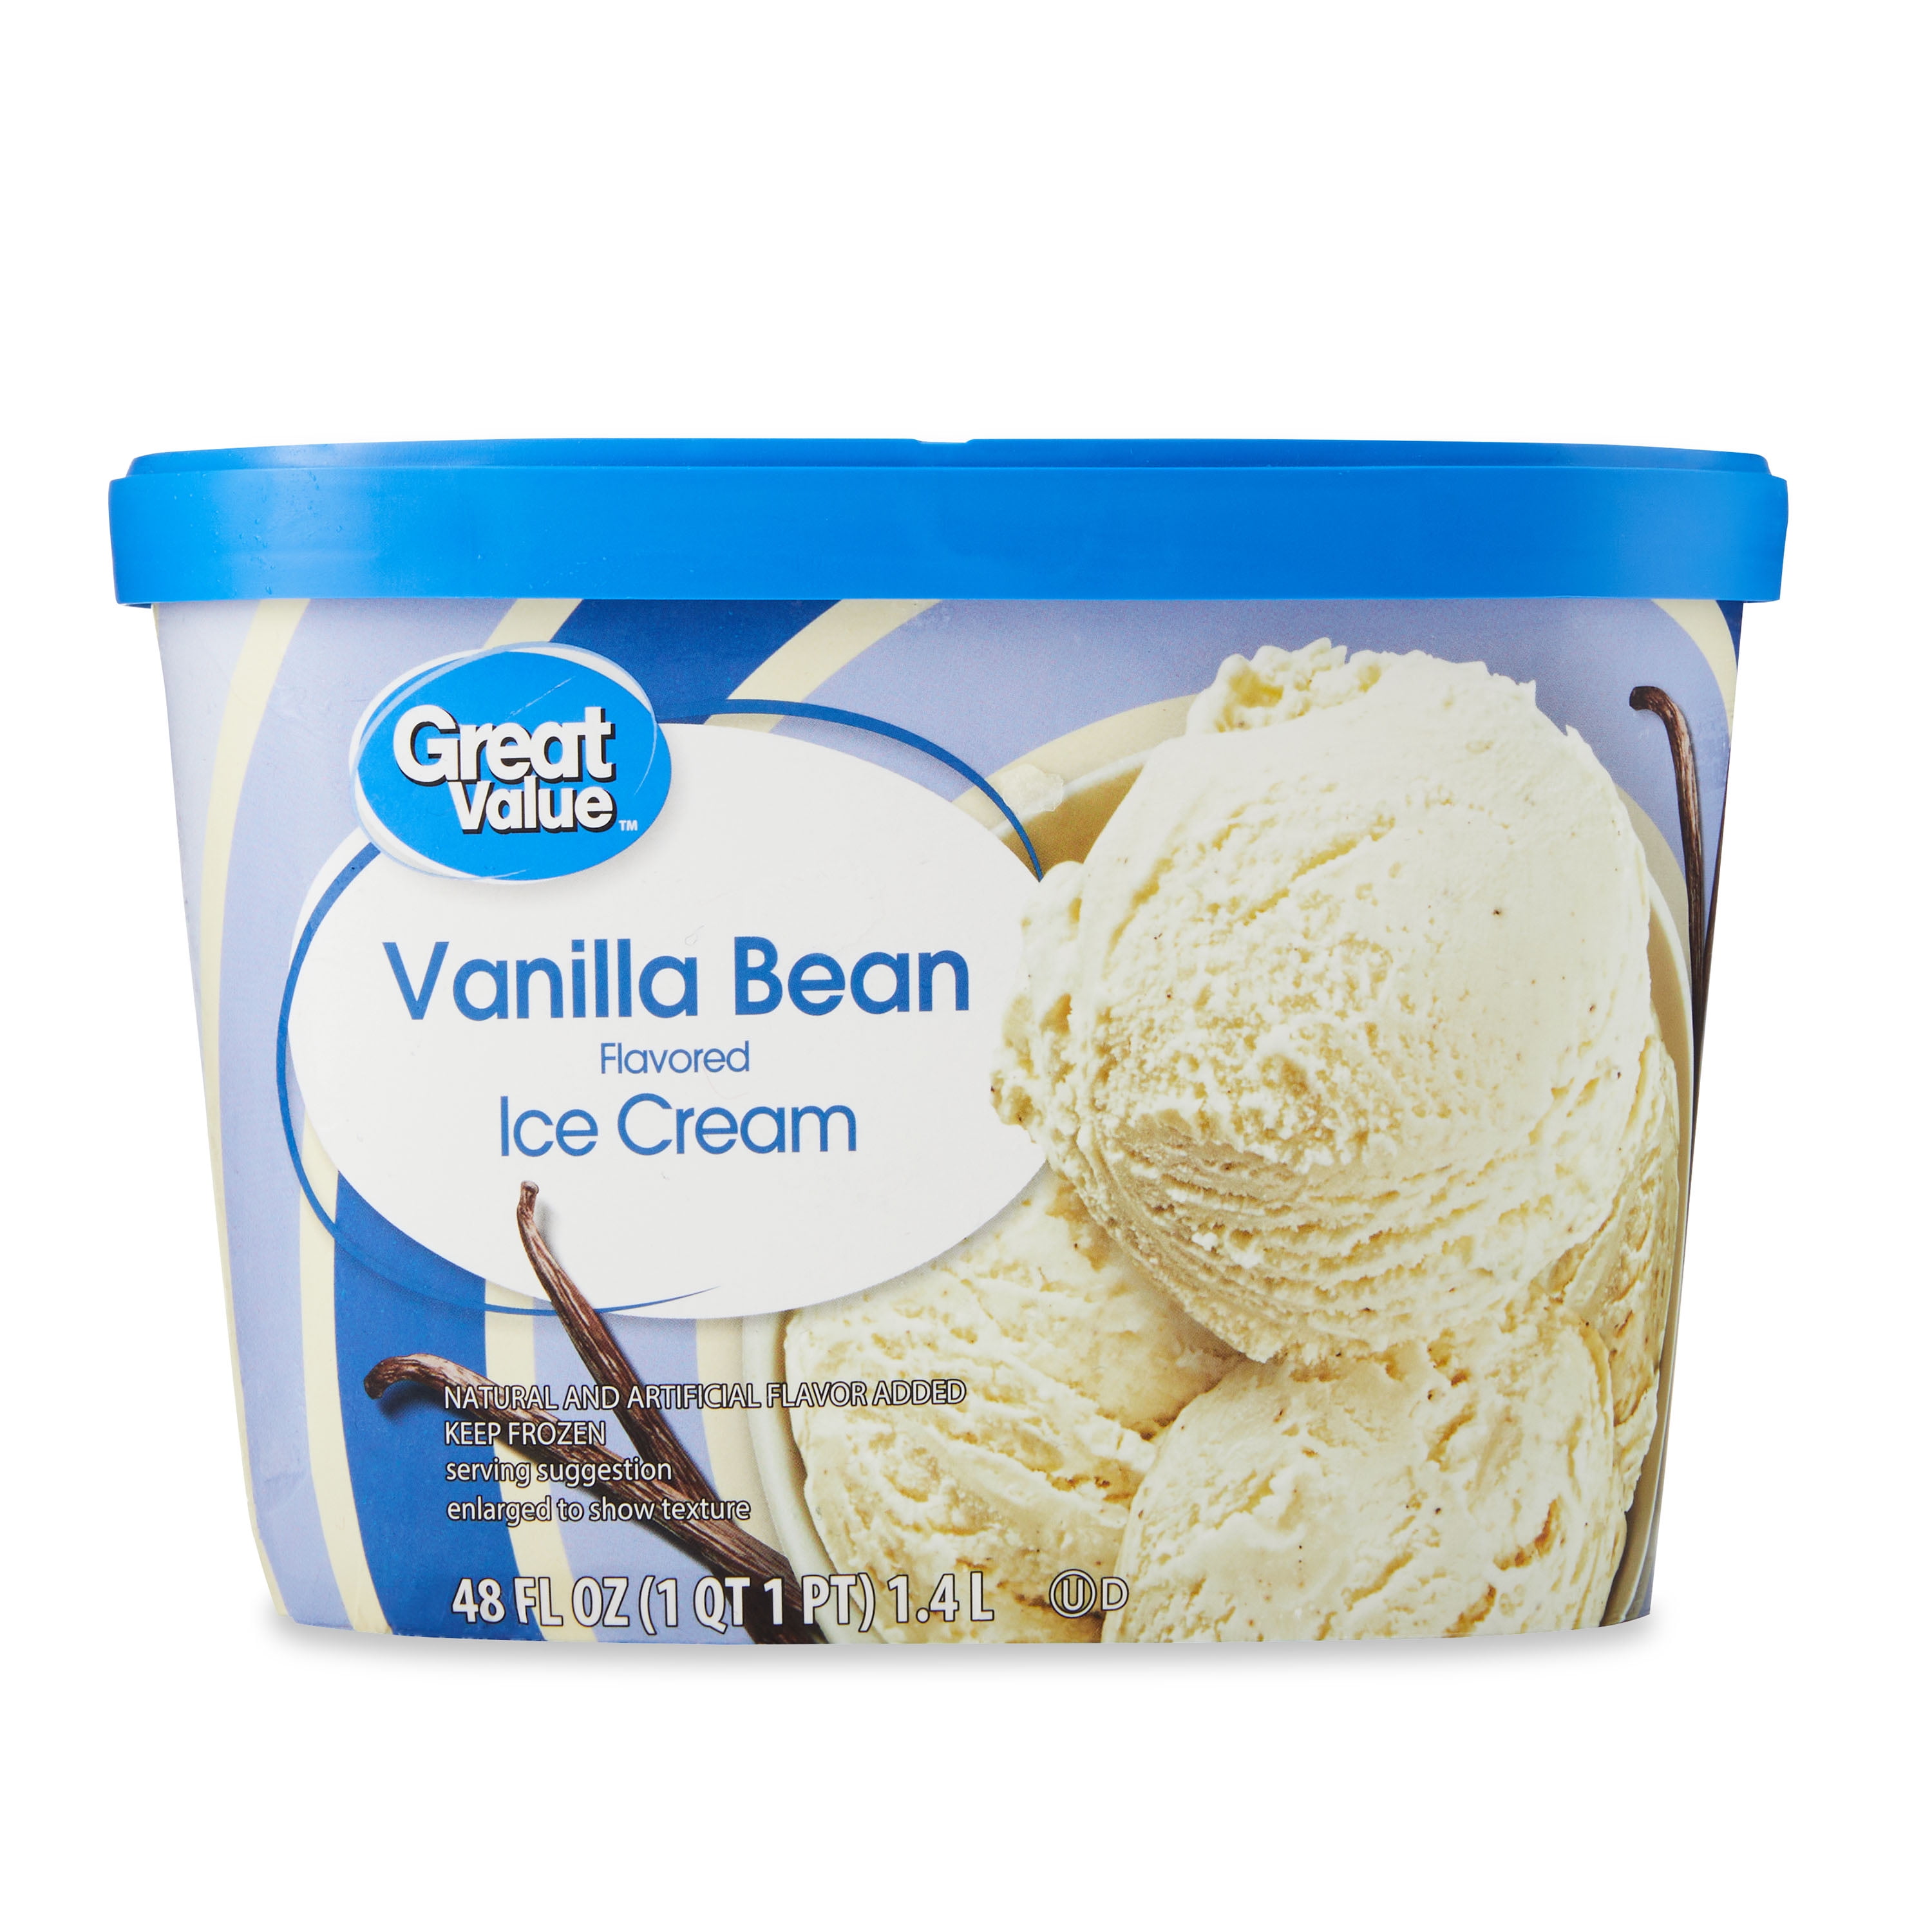 Great Value Vanilla Bean Flavored Ice Cream, 48 fl oz